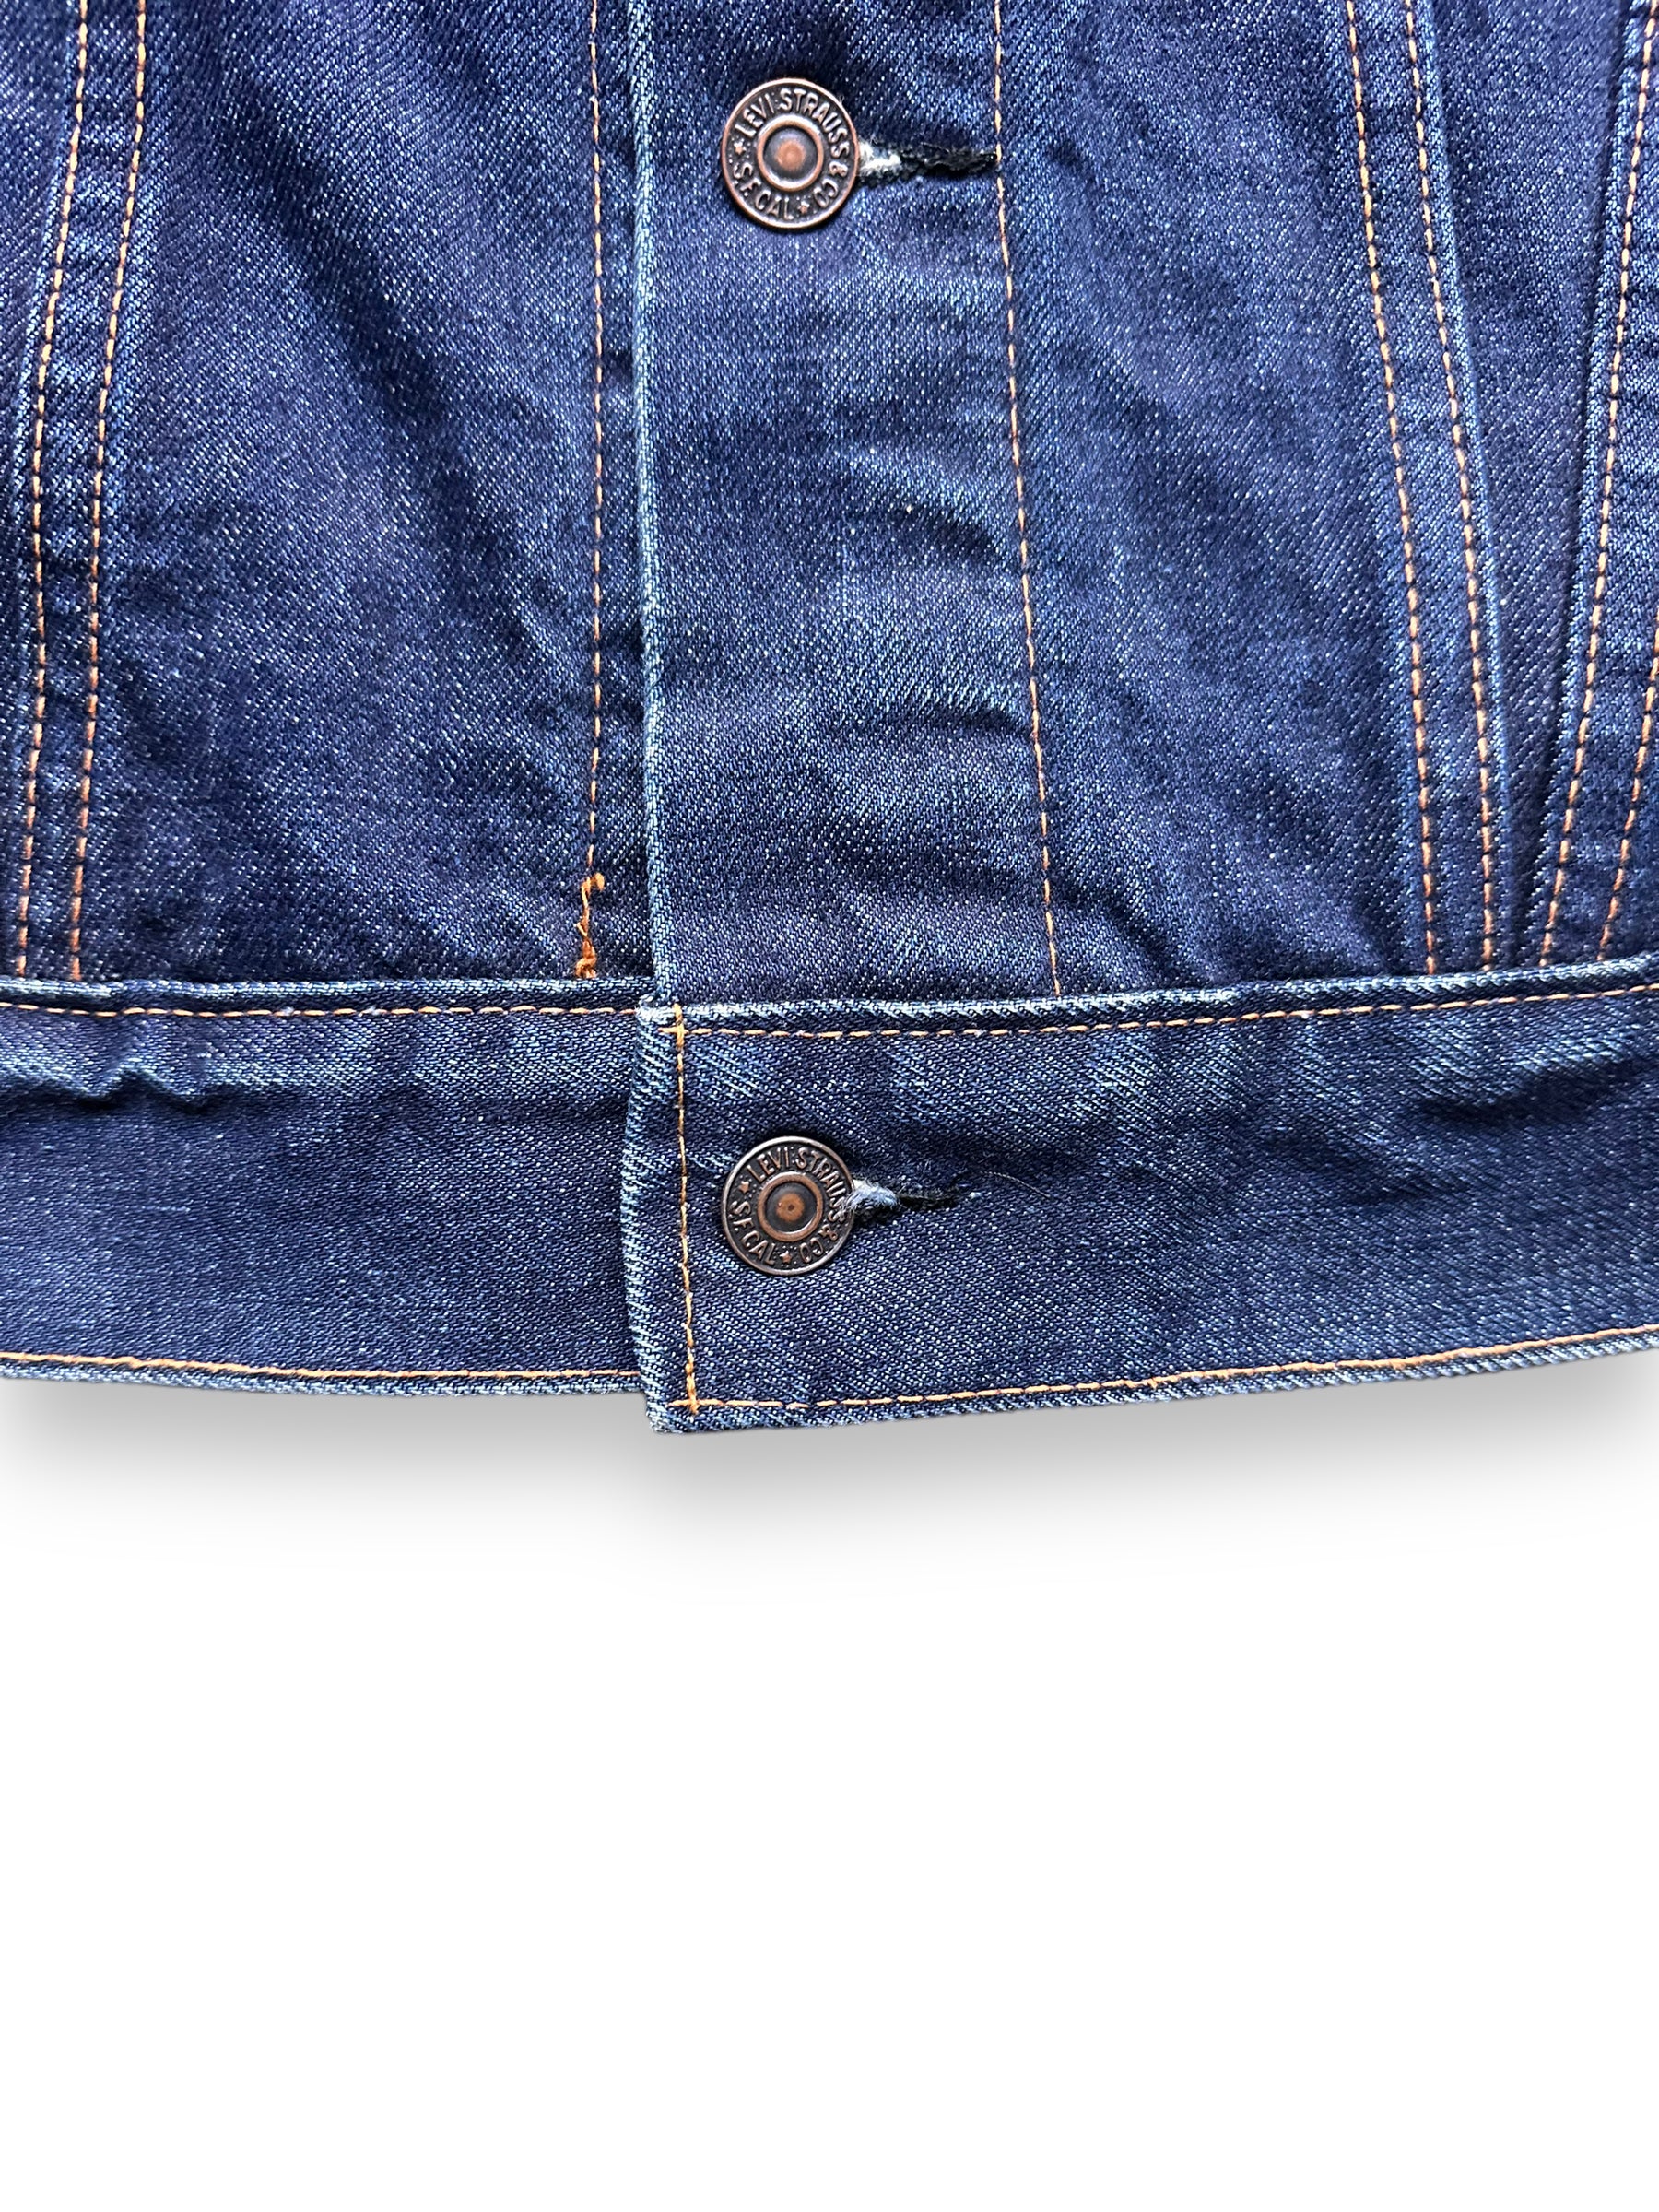 Single Stitched Hem on Vintage Levi's Big E Blanket Lined Type III Trucker SZ S | Vintage Denim Workwear Seattle | Seattle Vintage Denim